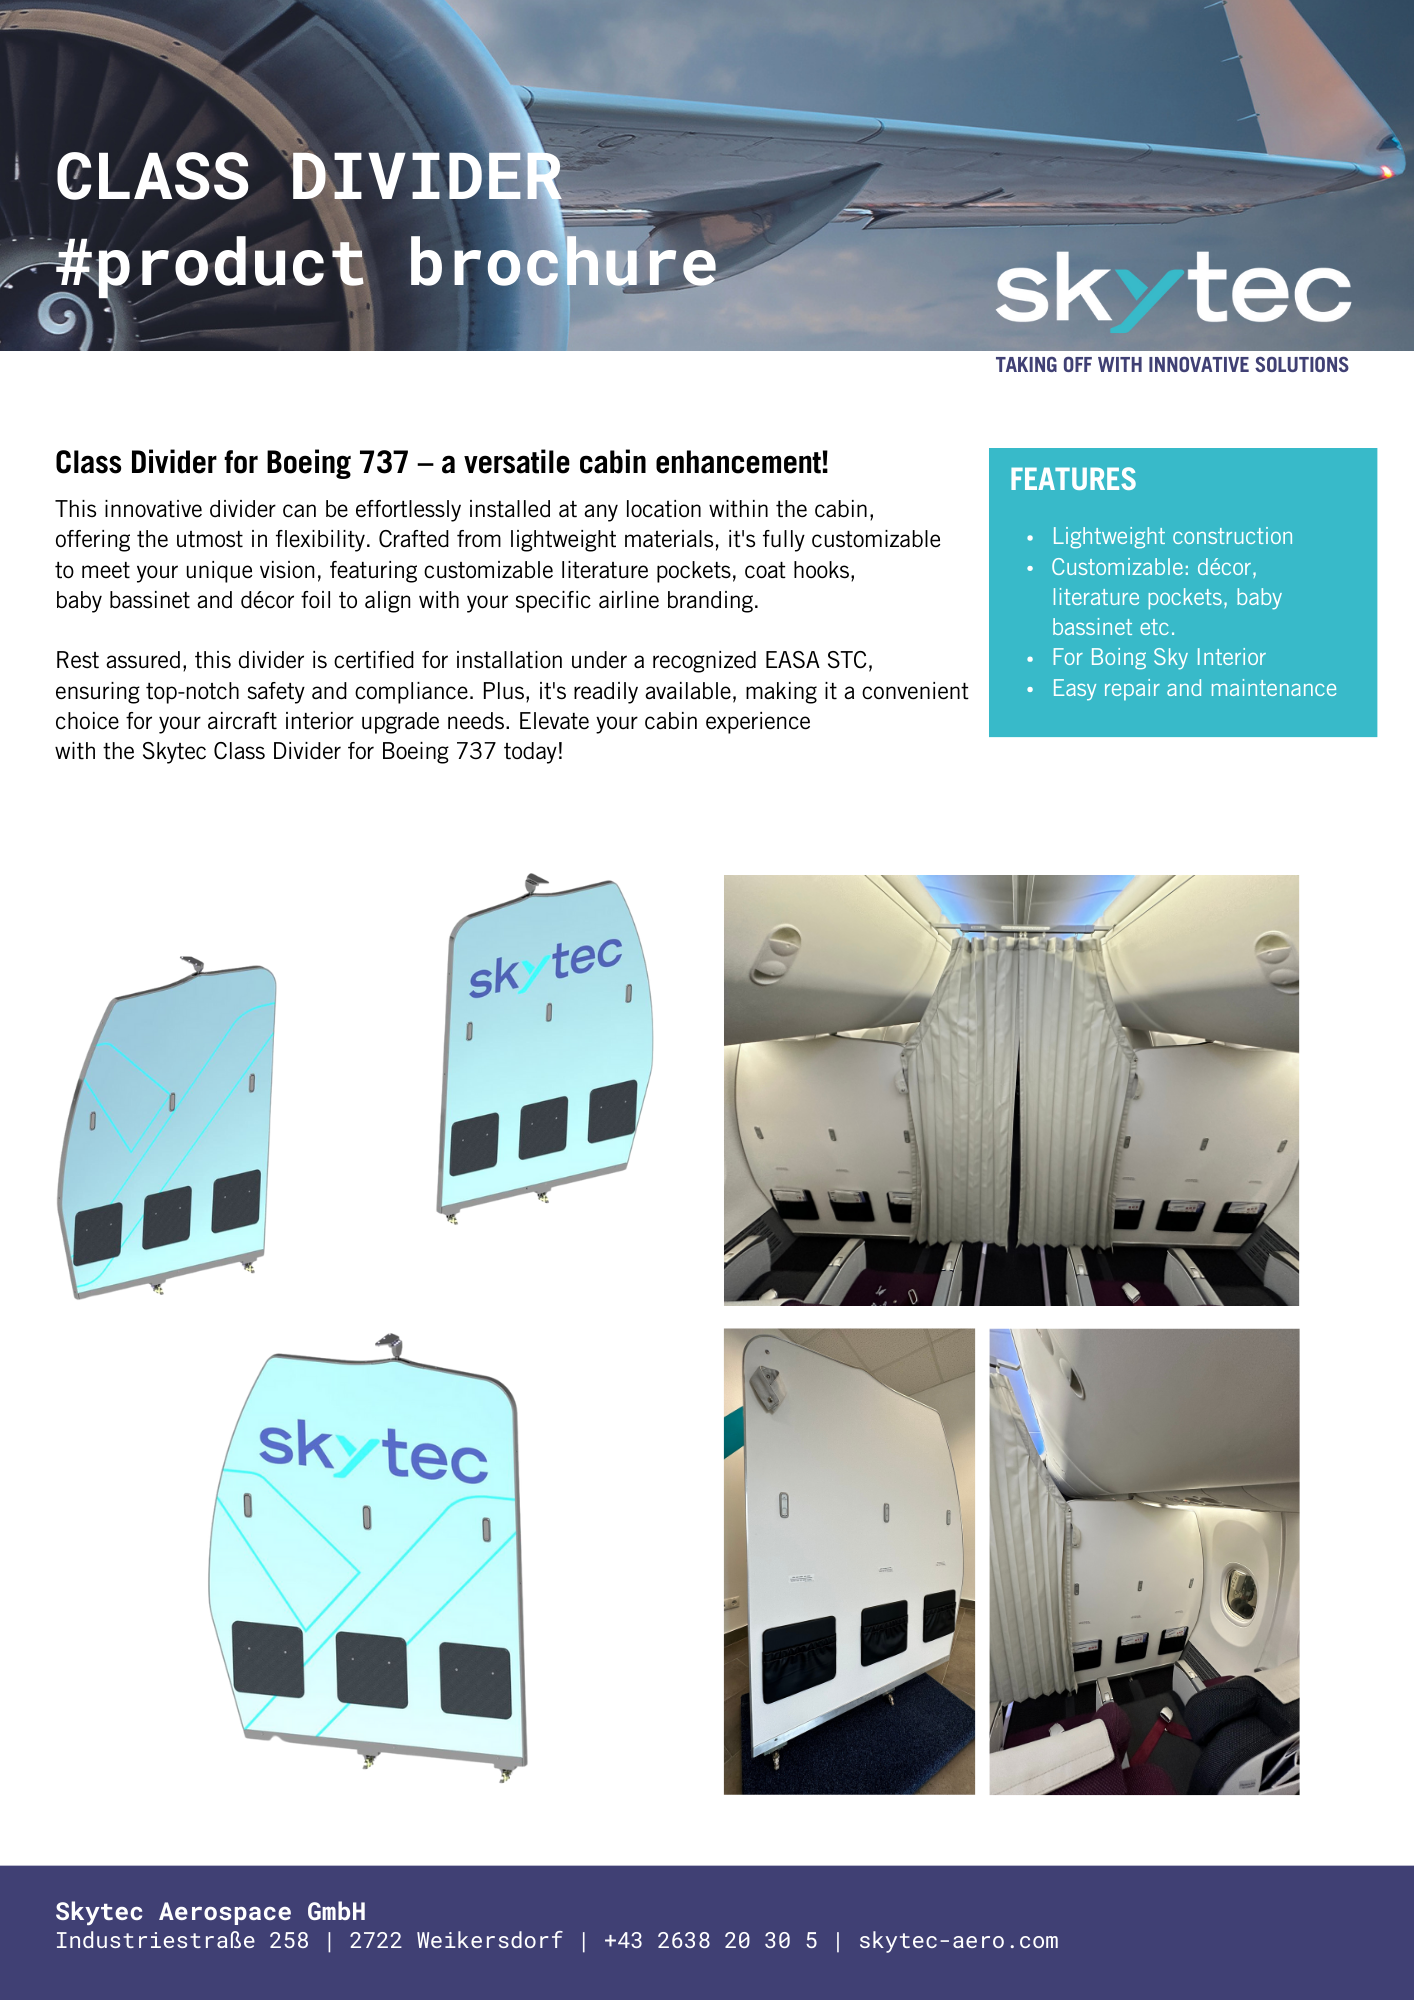 skytec company folder 2020 preview